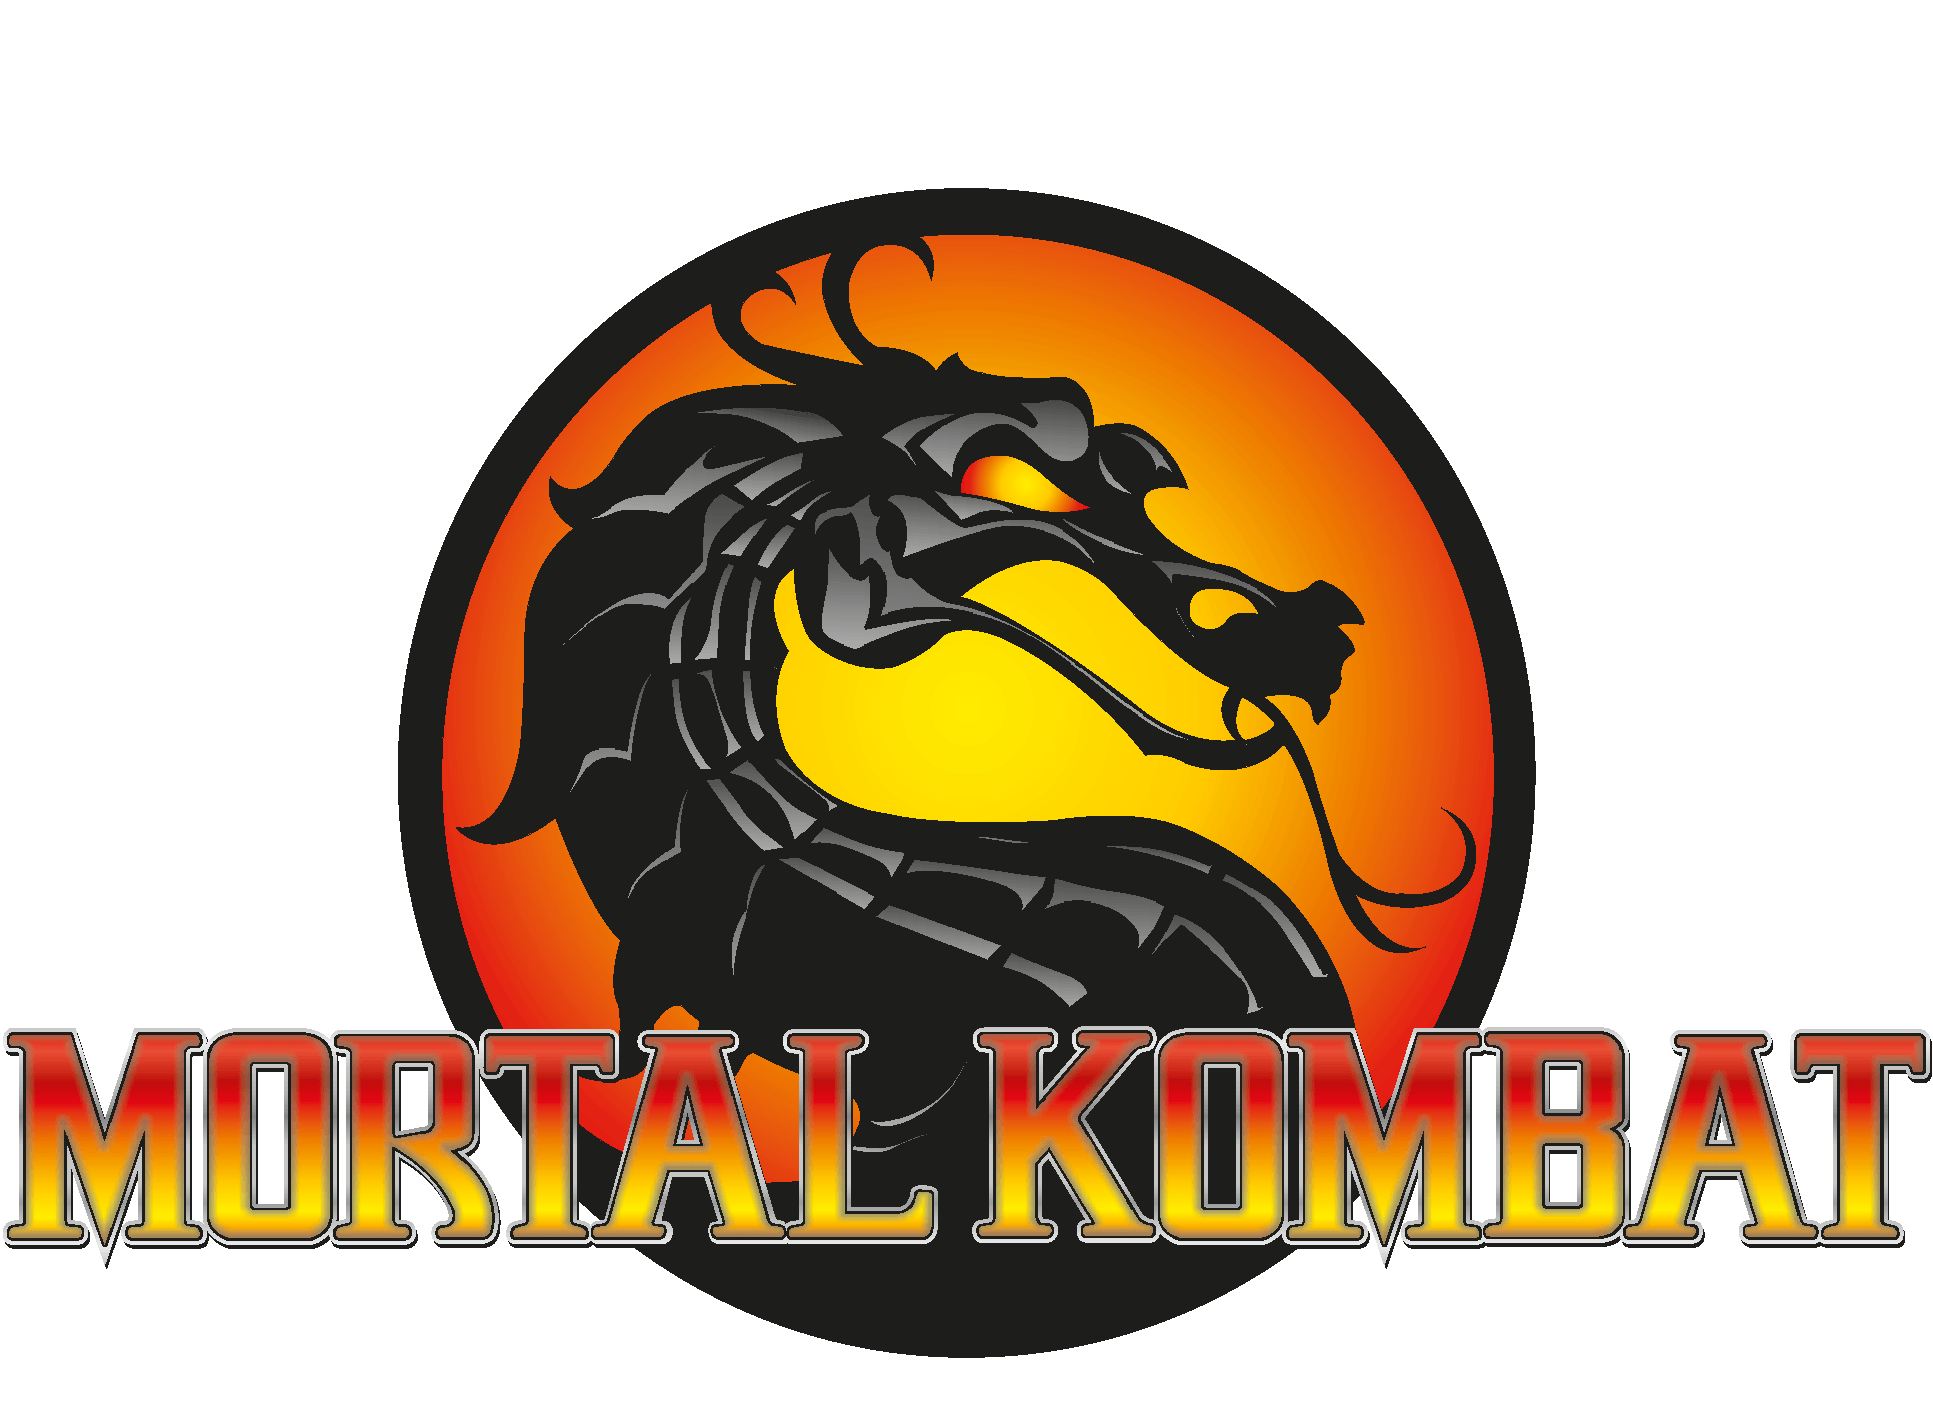 All Mortal Kombat Logo - Mortal Kombat PNG images free download